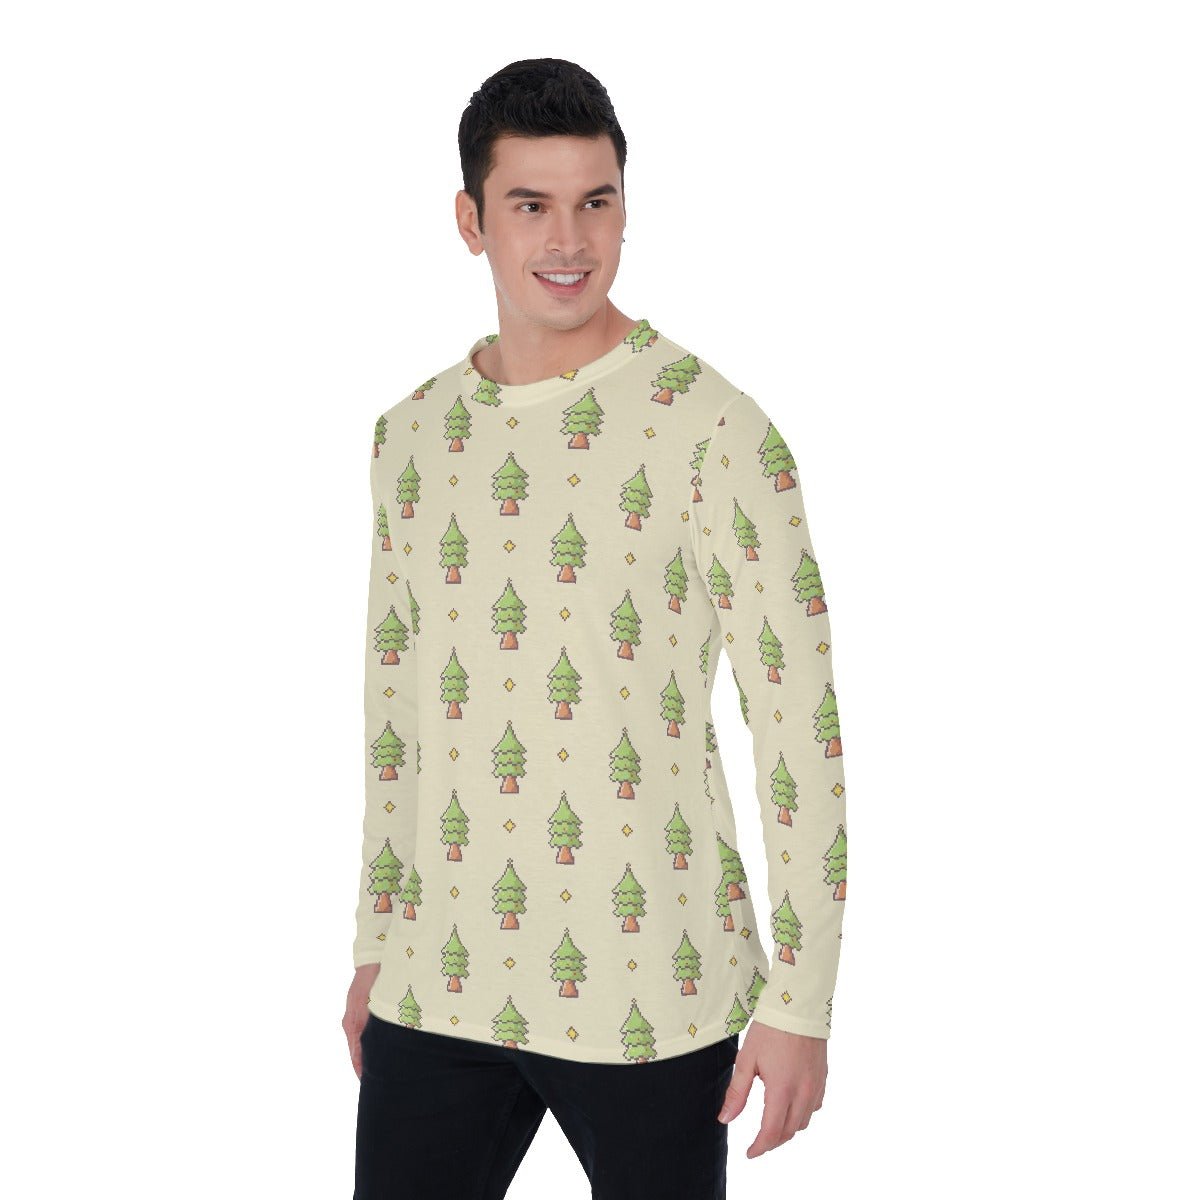 Men's Long Sleeve Christmas T-Shirt - 16-Bit Christmas Trees - Festive Style